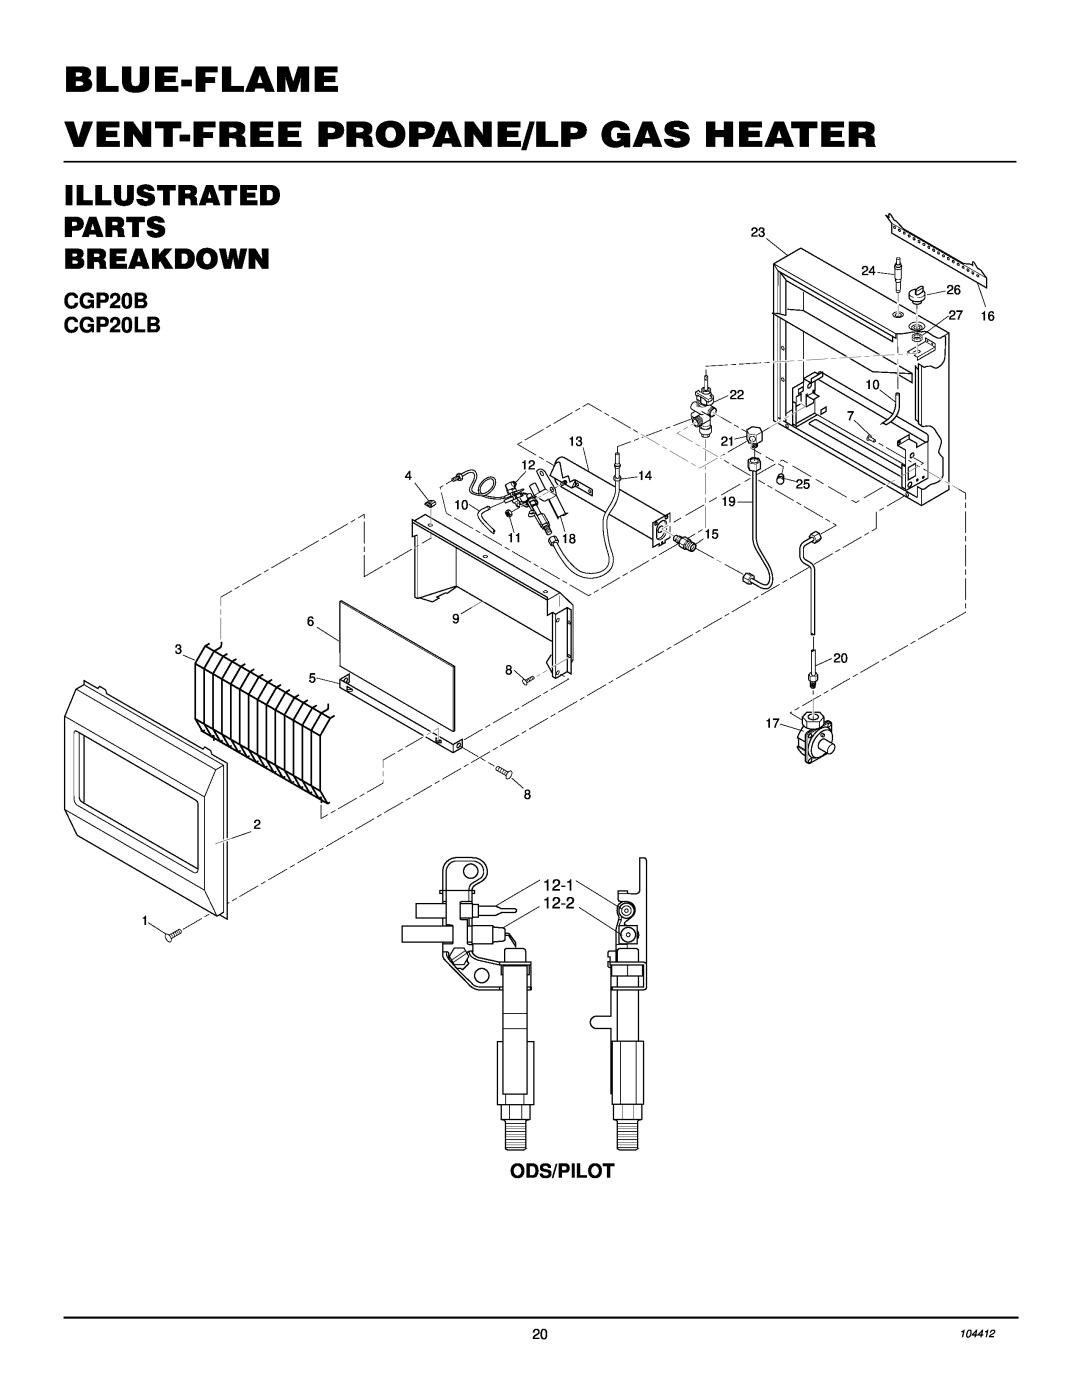 Desa RP30E Blue-Flame Vent-Freepropane/Lp Gas Heater, Illustrated Parts Breakdown, Ods/Pilot, 23 24 26 27 10 22 7, 104412 